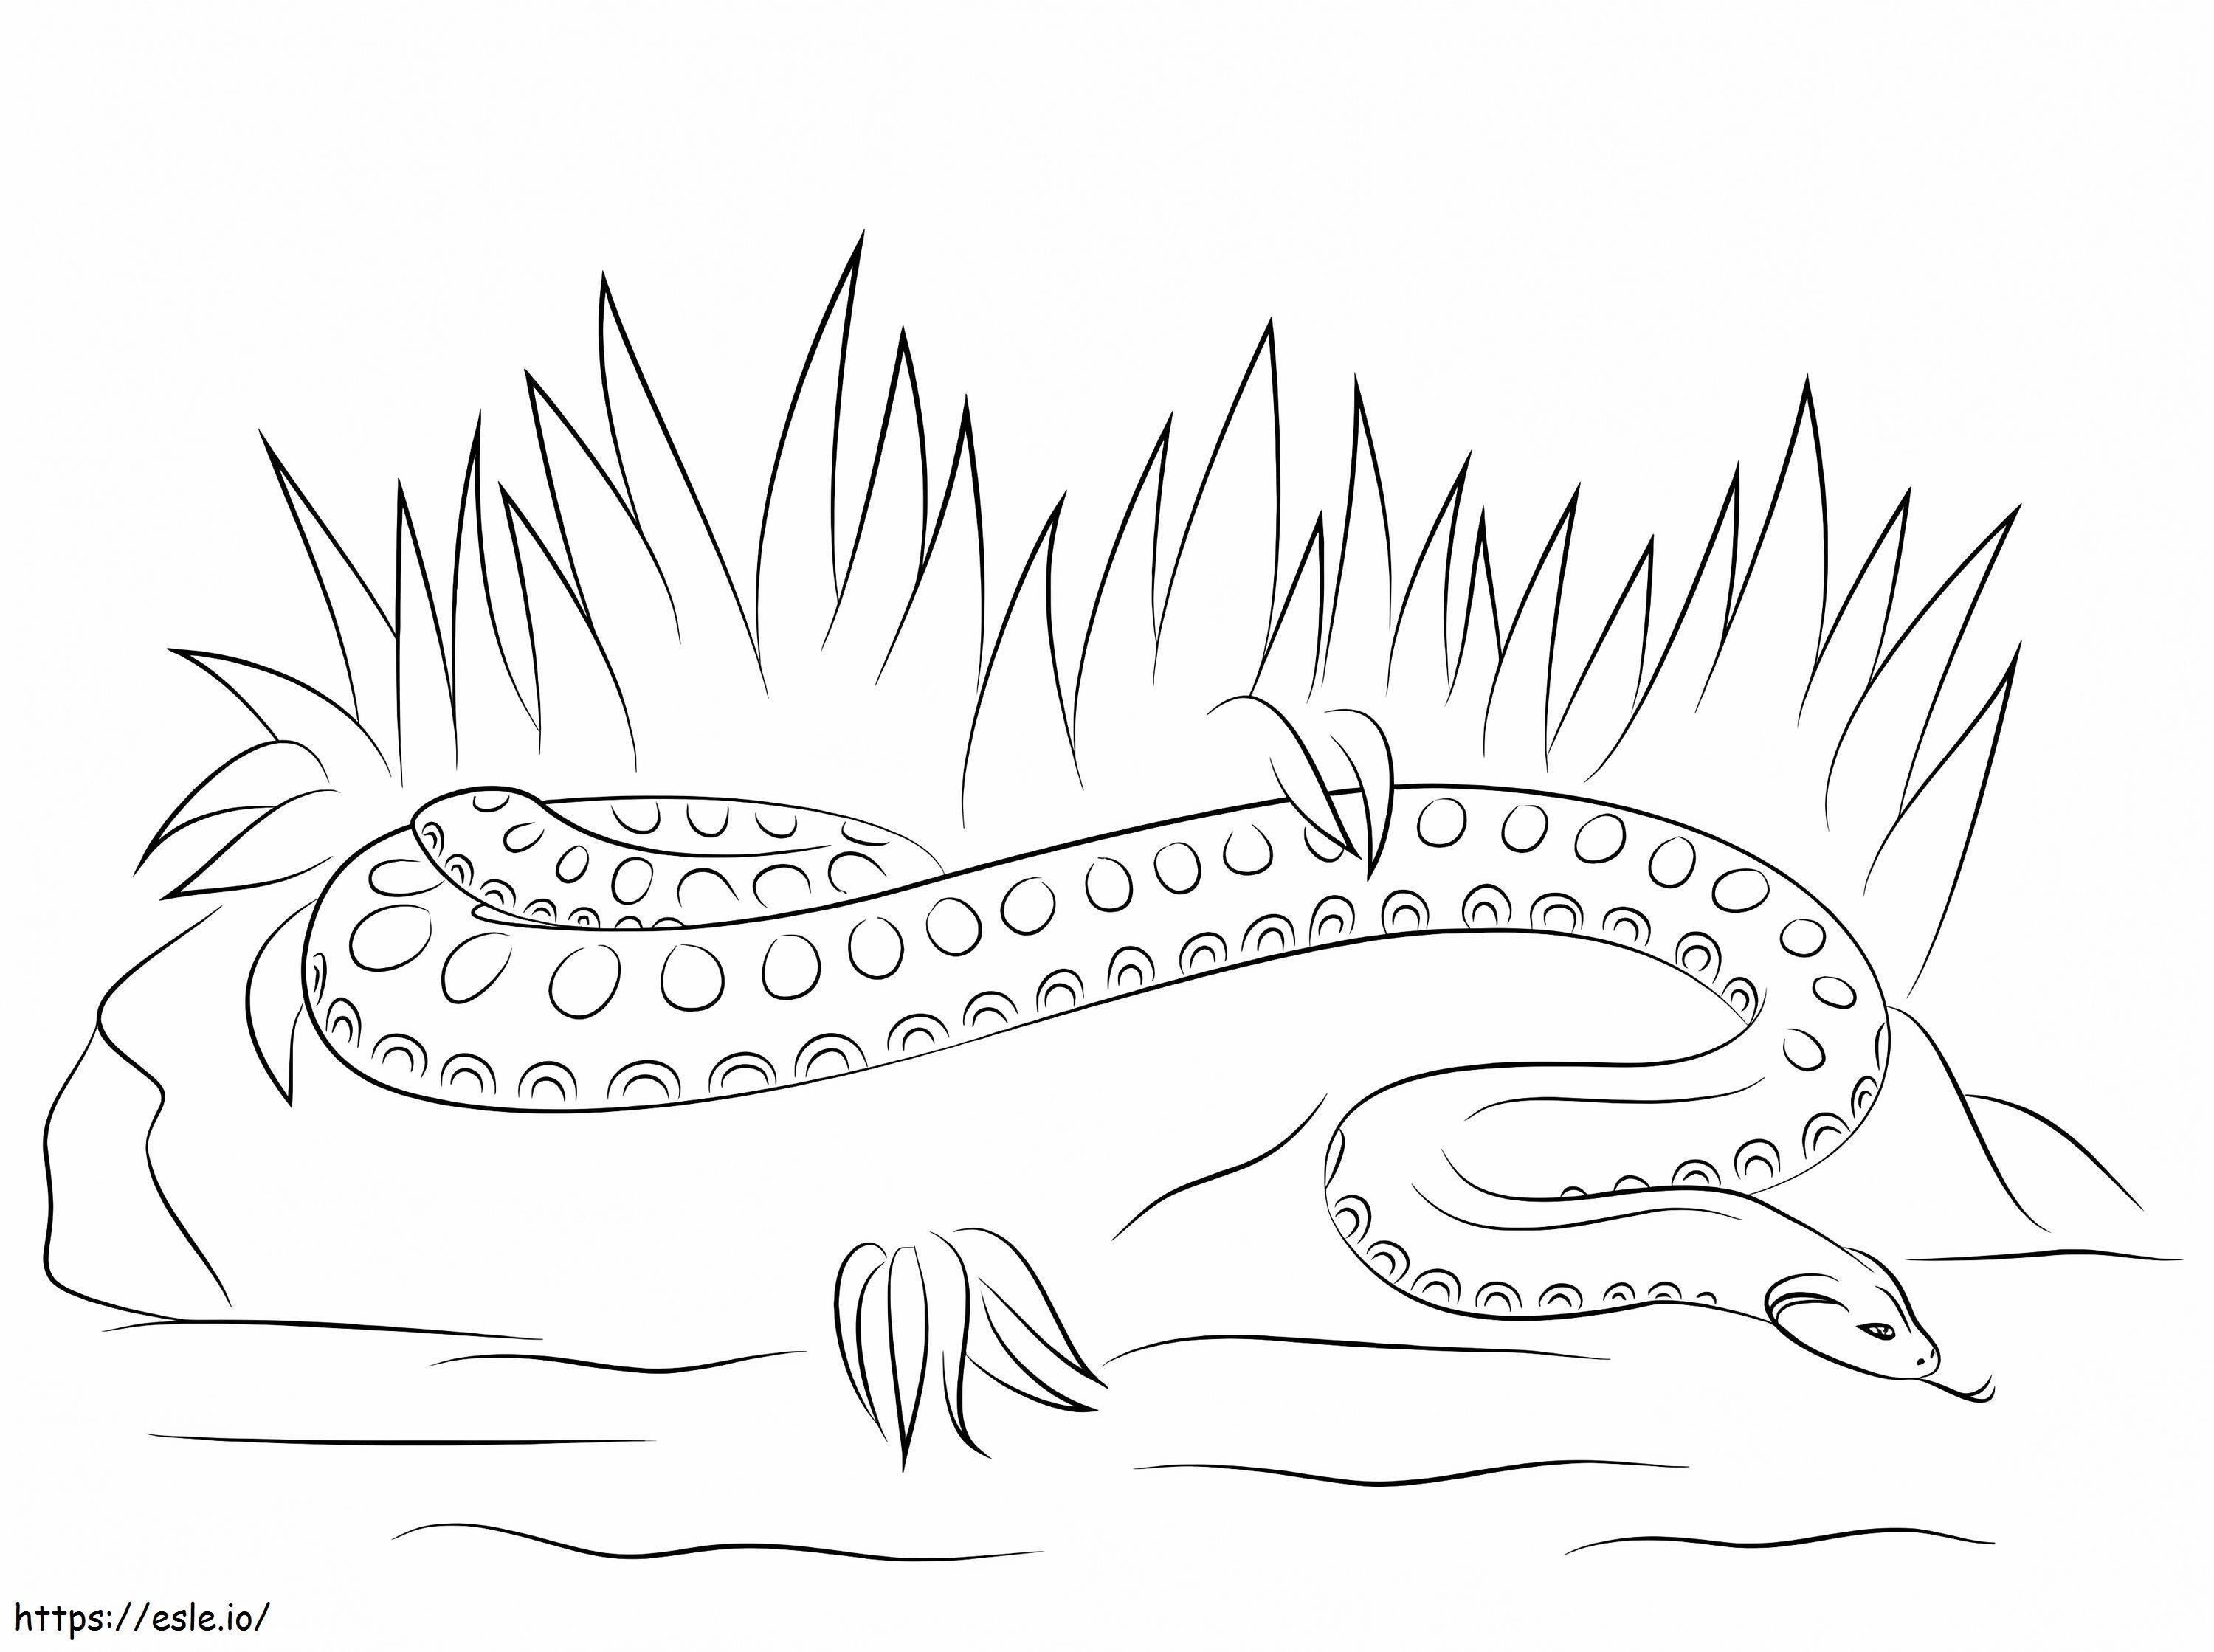 Coloriage Anaconda simple à imprimer dessin